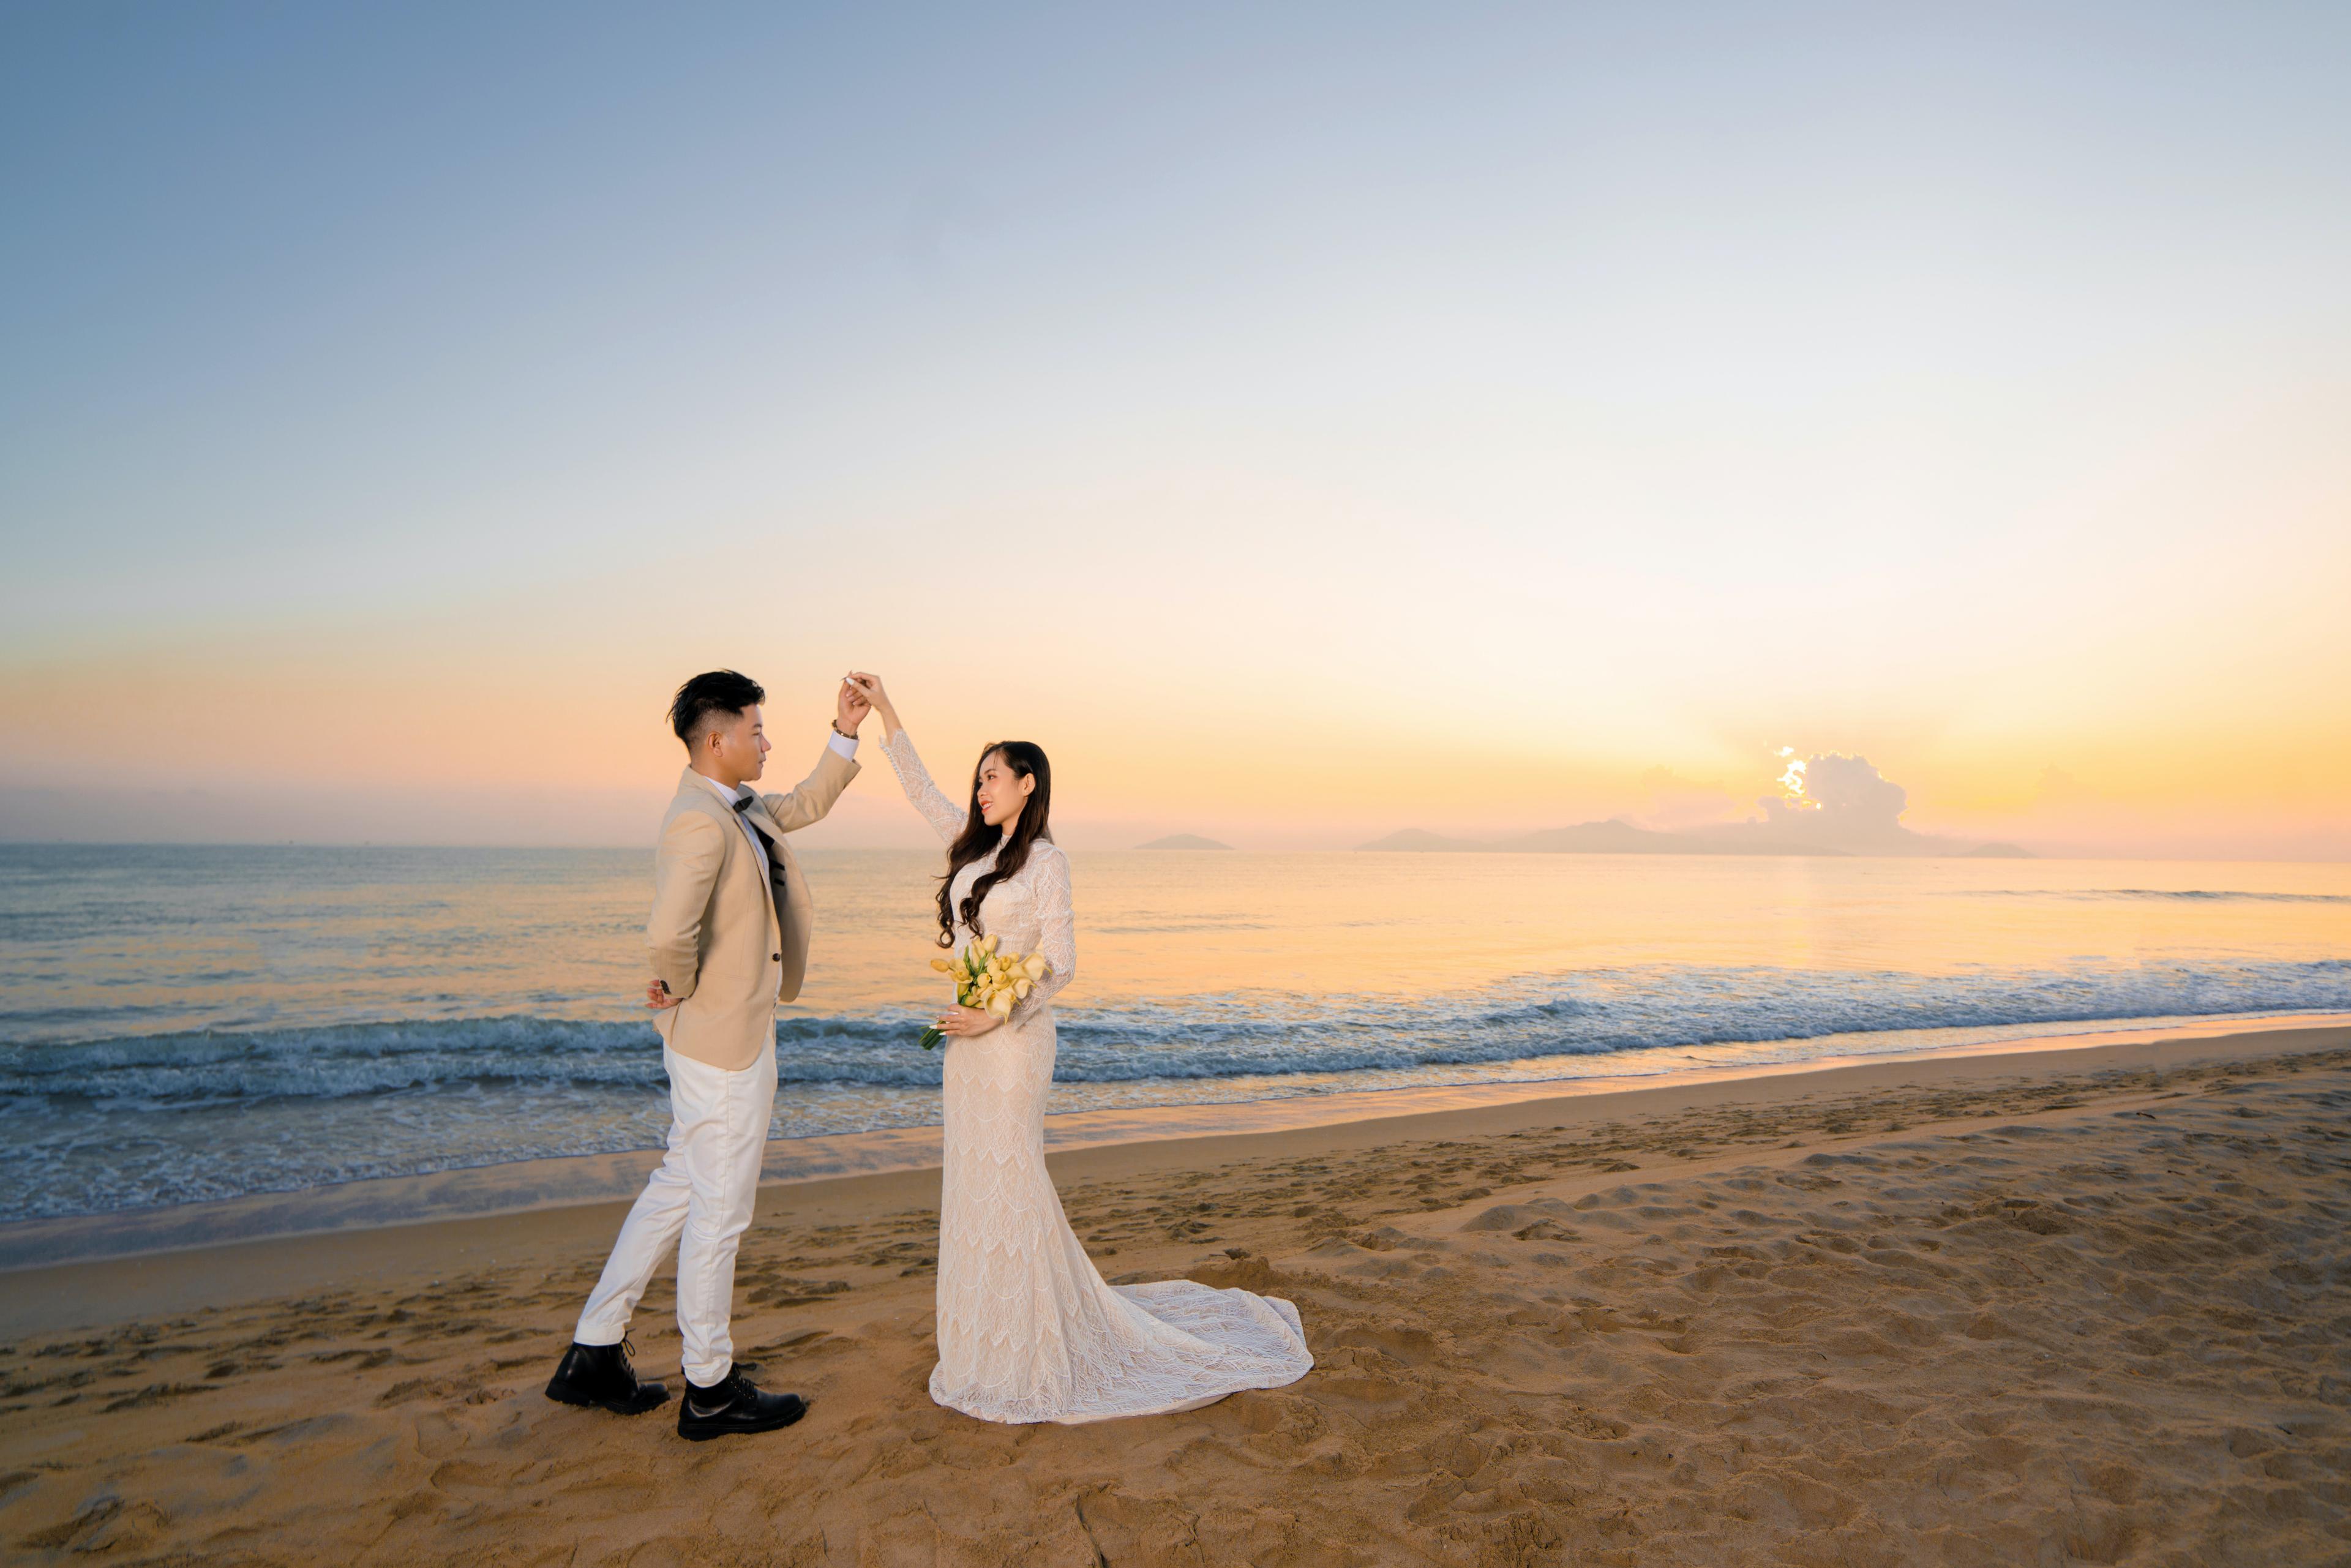 Beach Weddings at Angsana Teluk Bahang, Penang